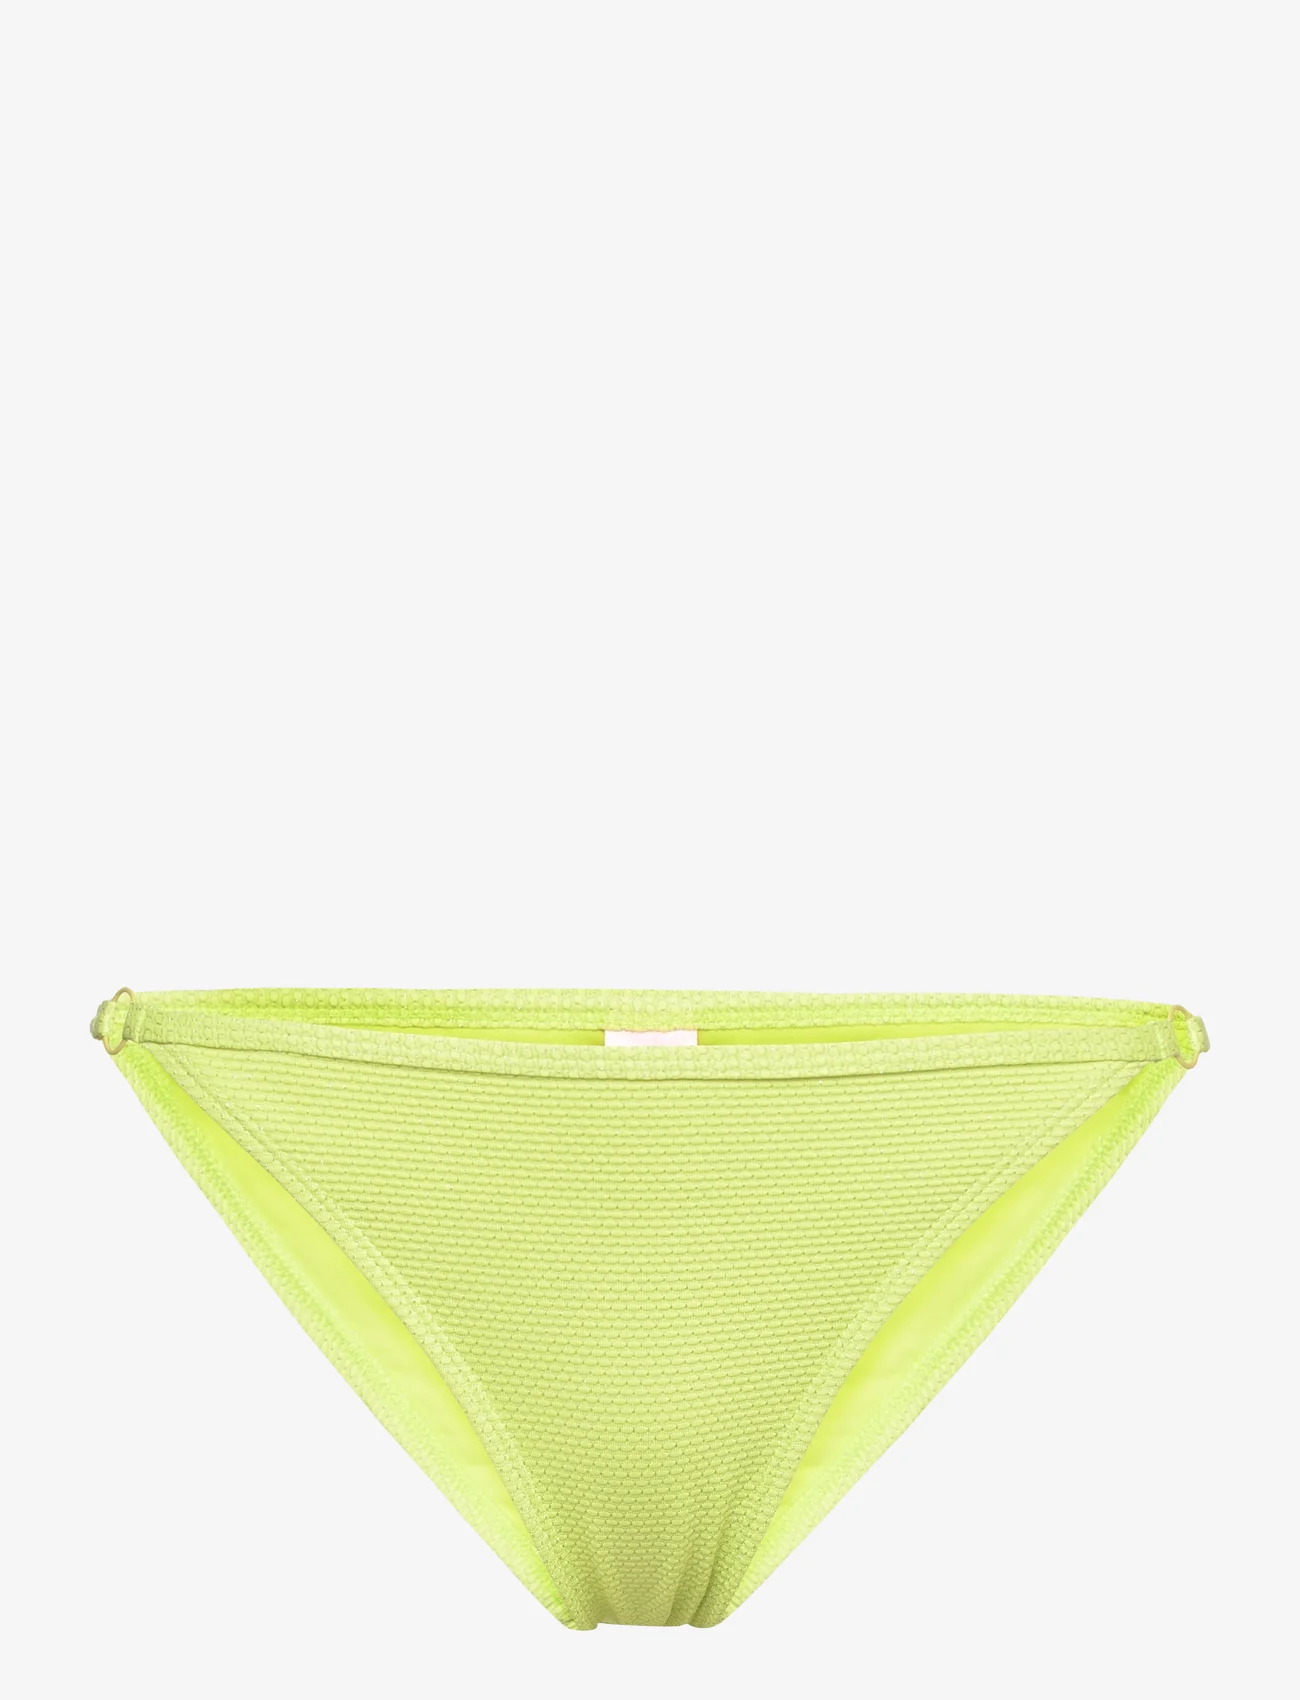 Hunkemöller - Fiji lurex cheeky t - bikinibriefs - lime green - 0